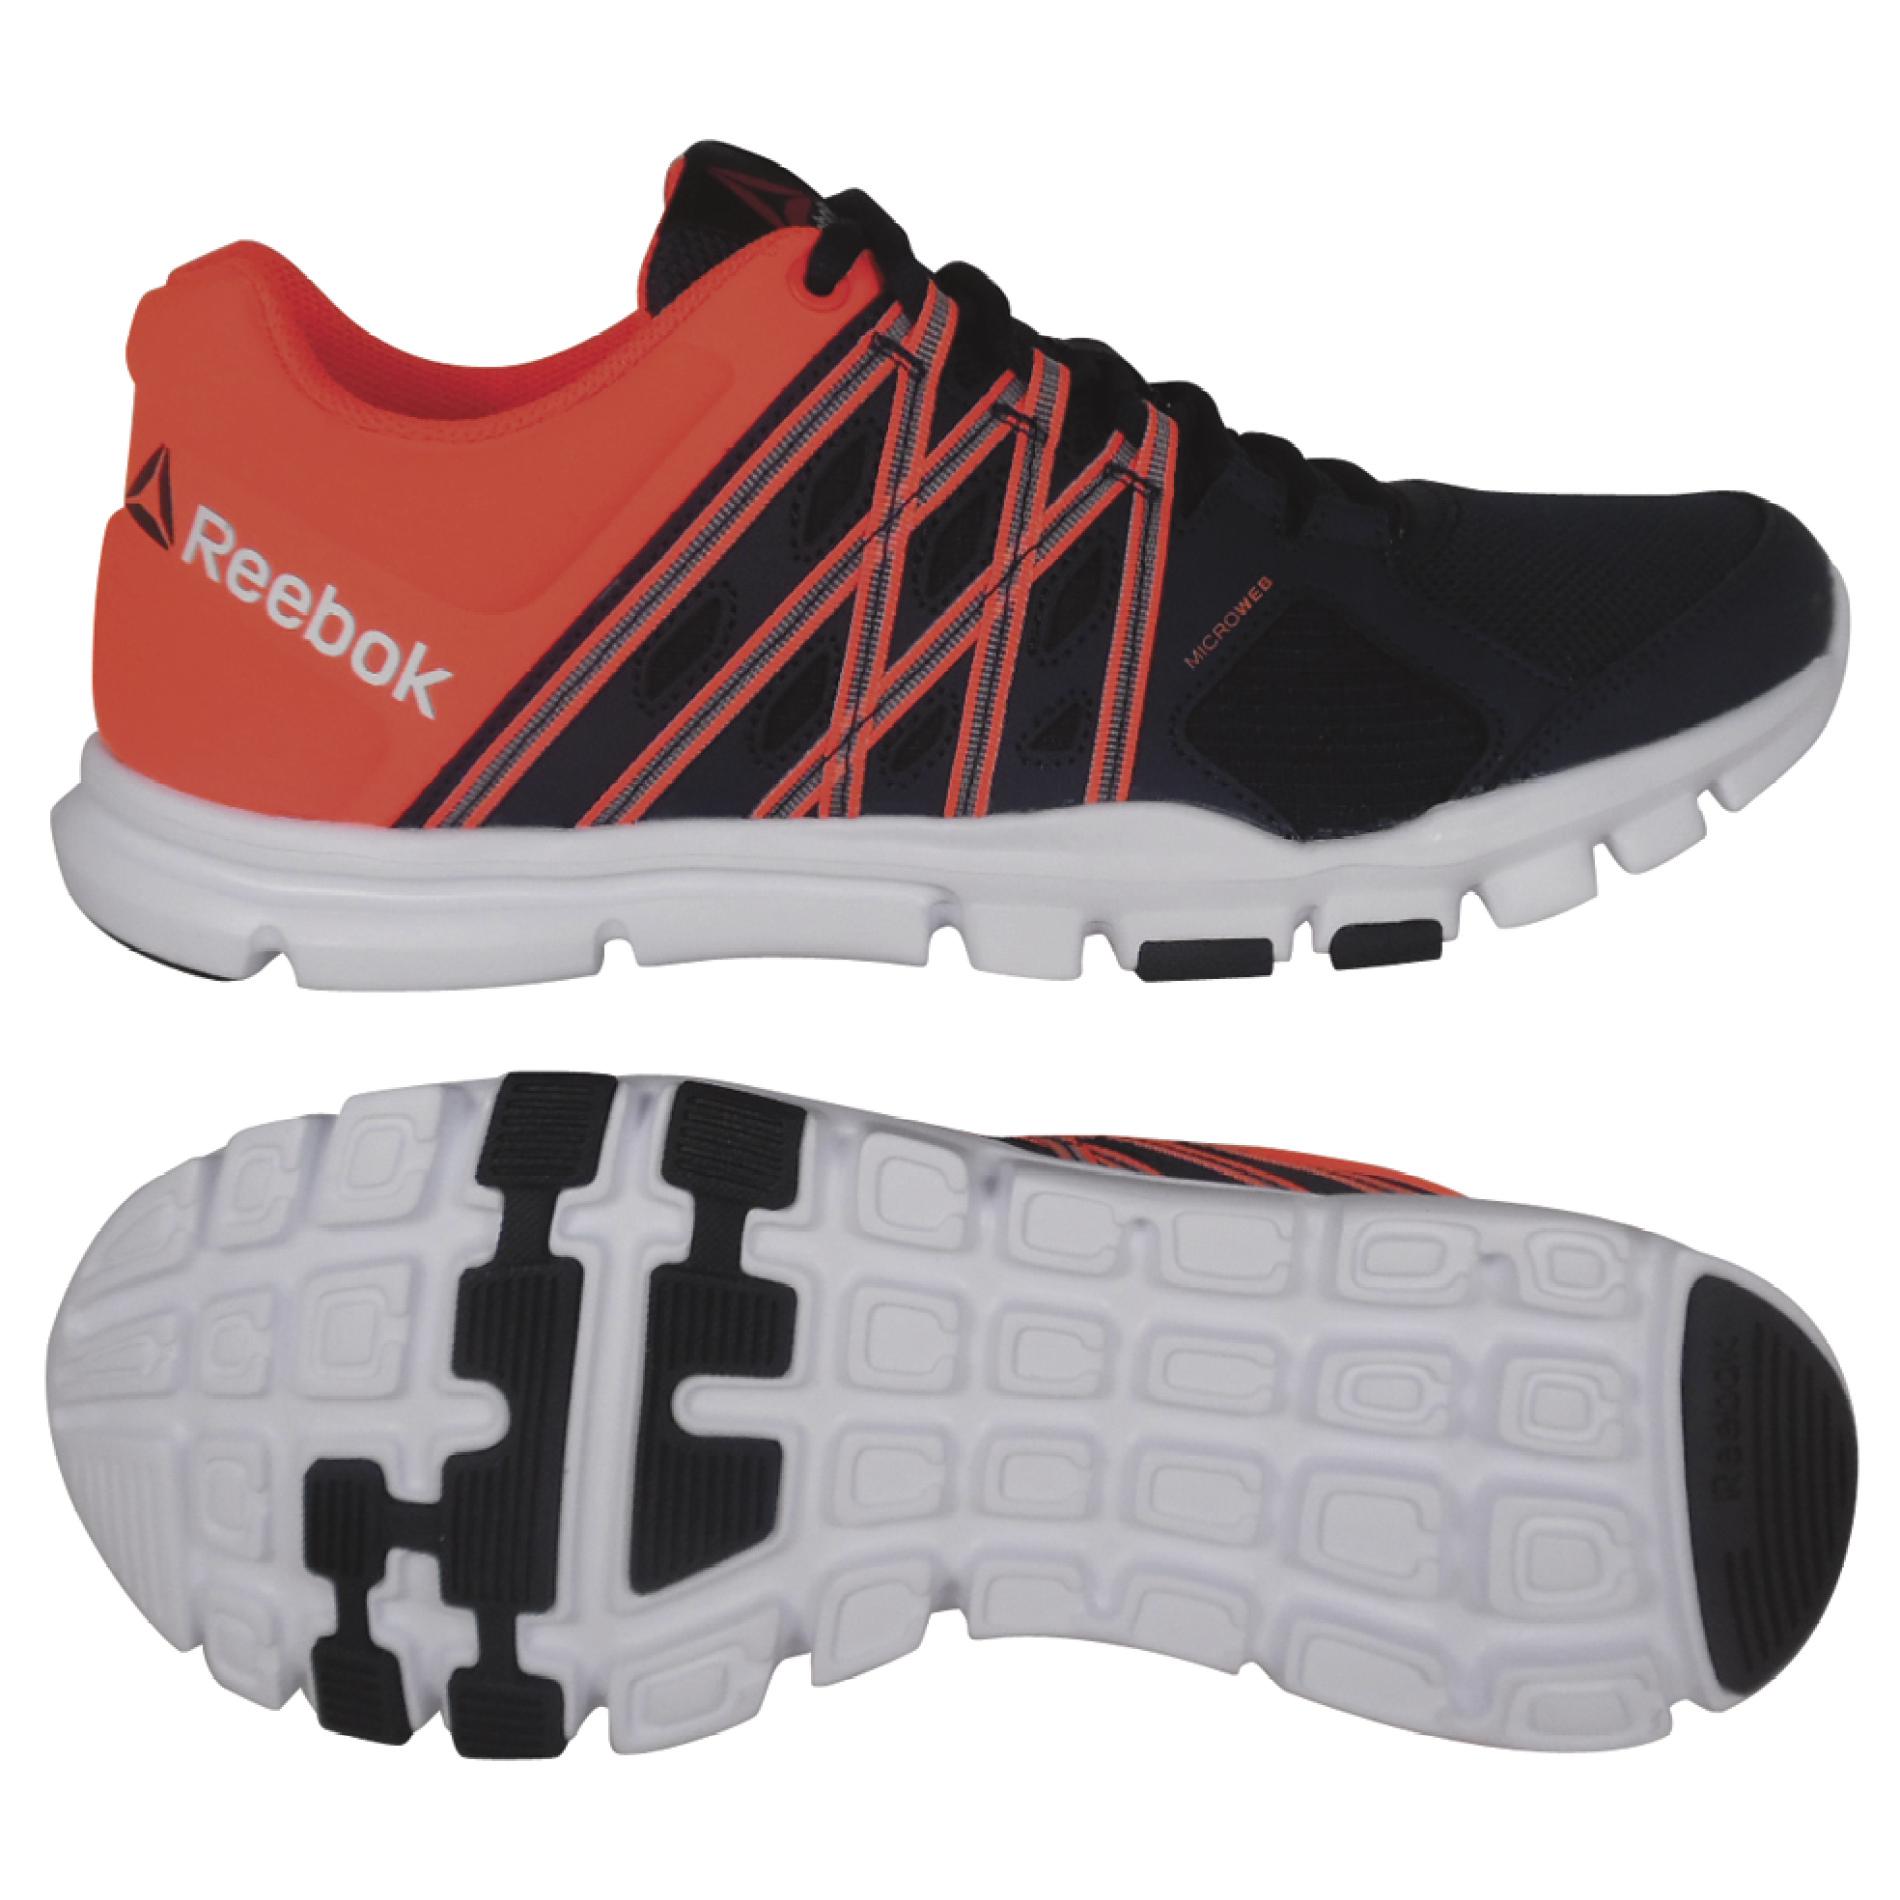 Reebok Men's FlexTrain Athletic Shoe - Red/Black